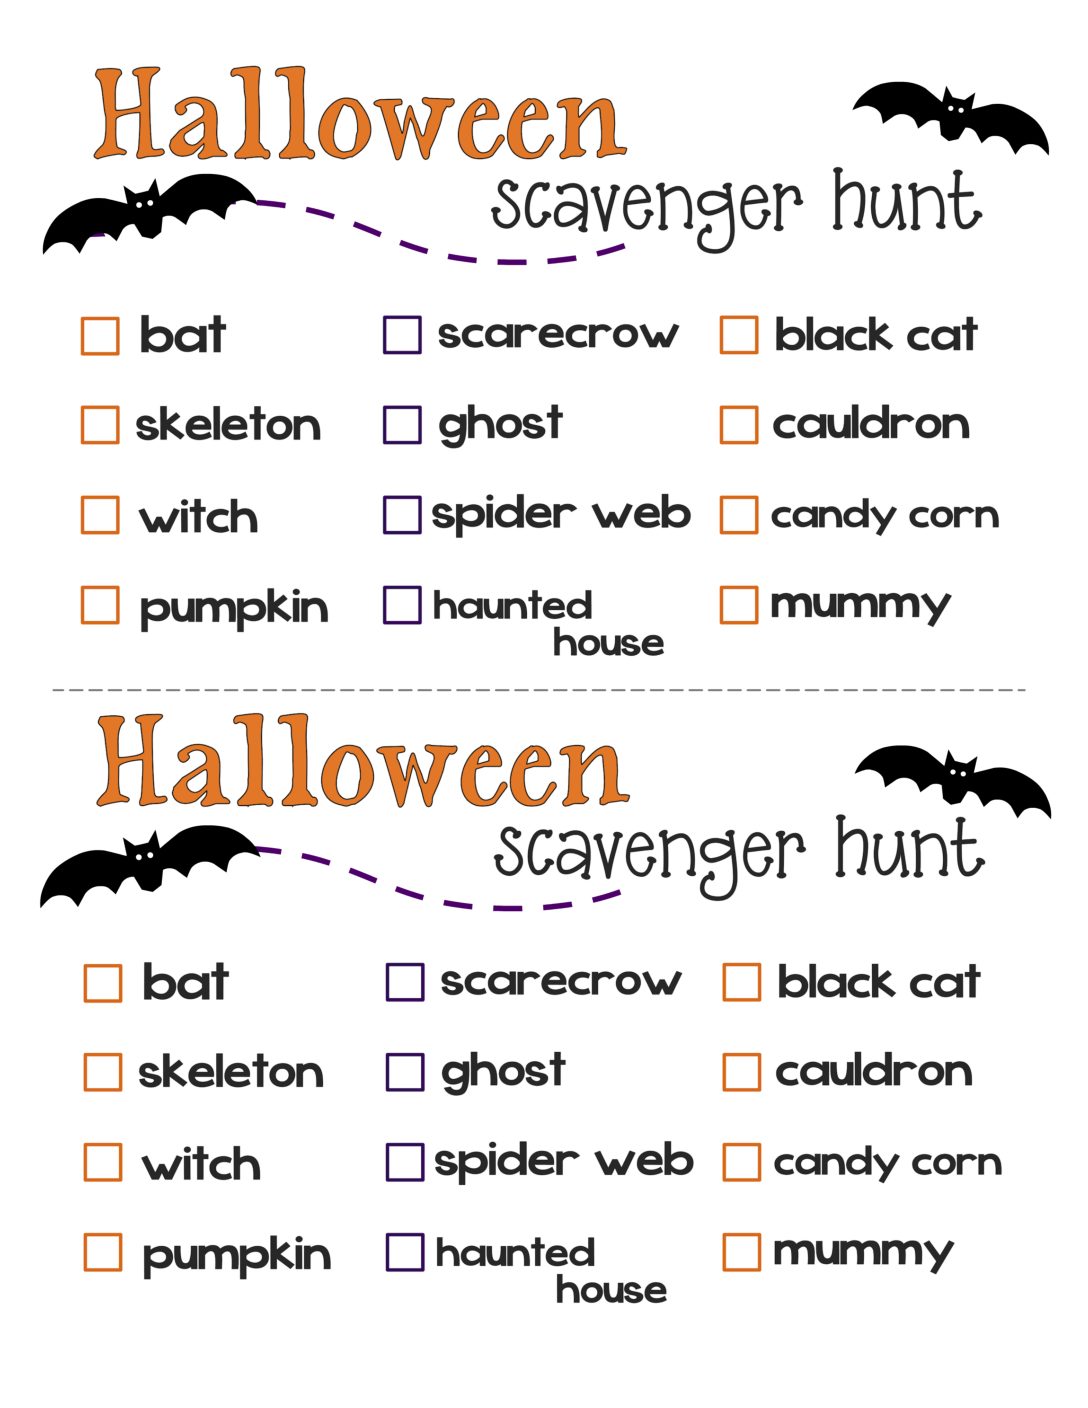 HalloweenScavengerHunt - Typically Simple